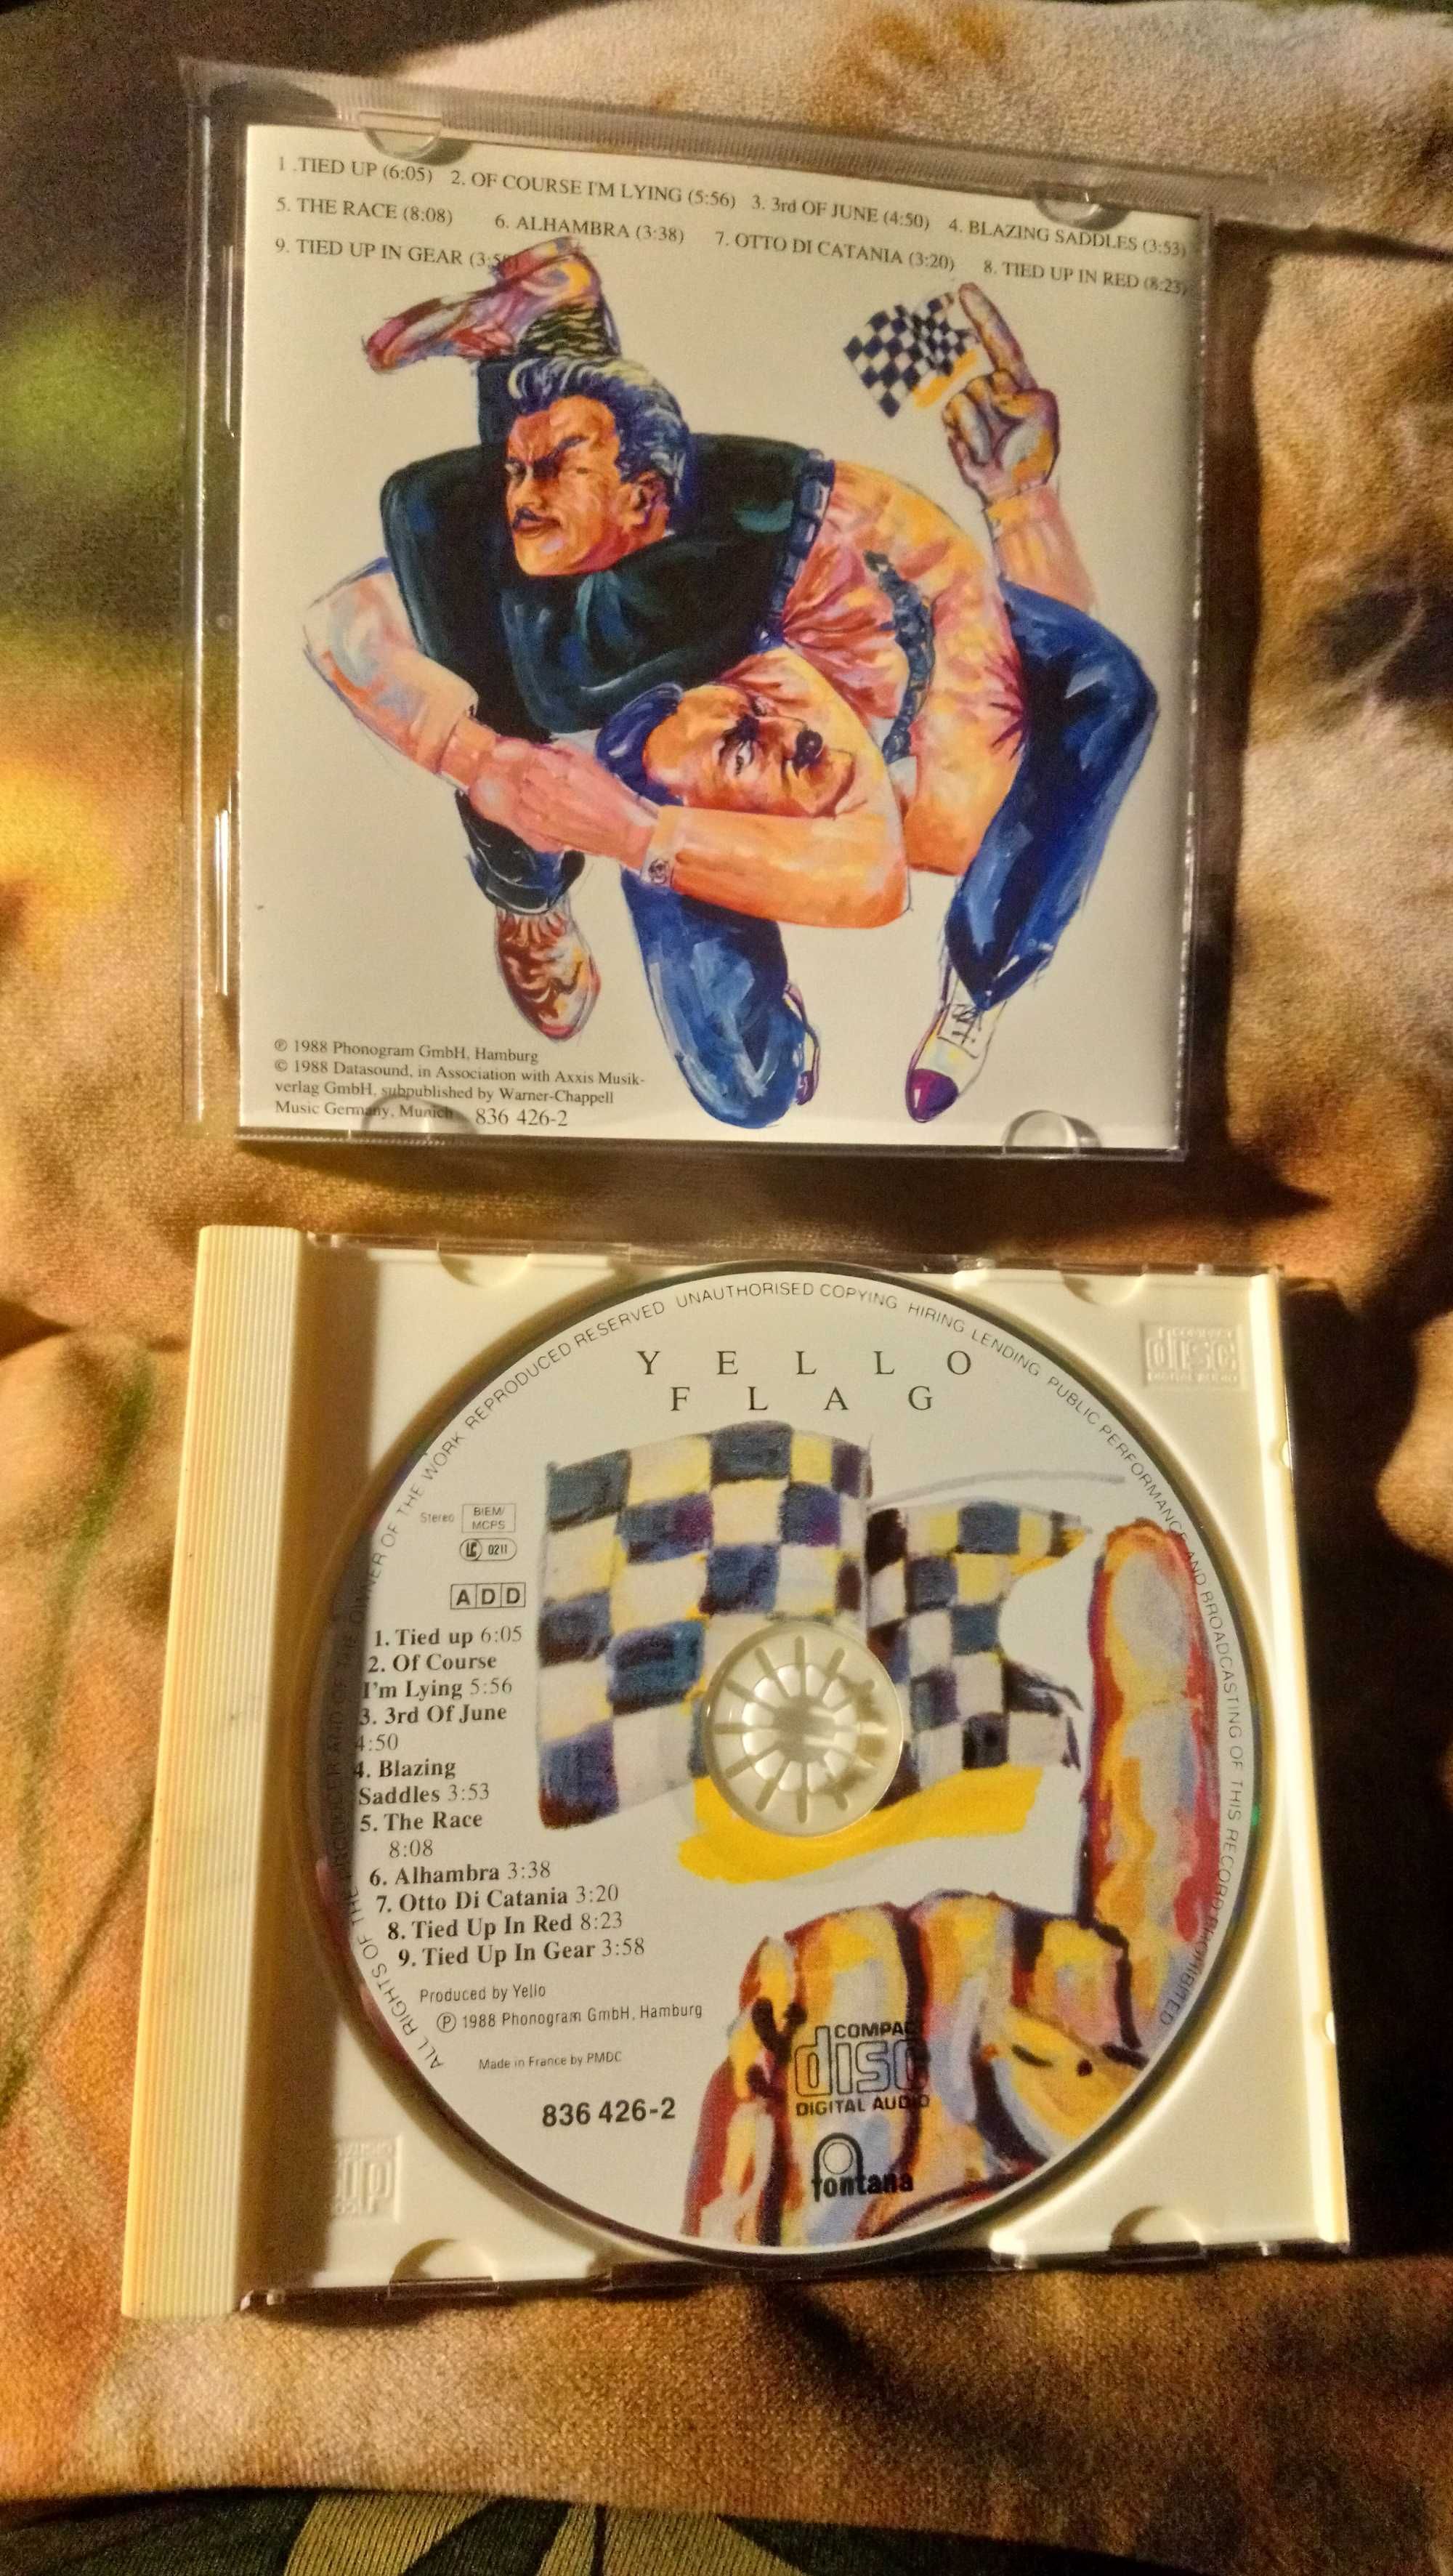 Yello flag płyta CD